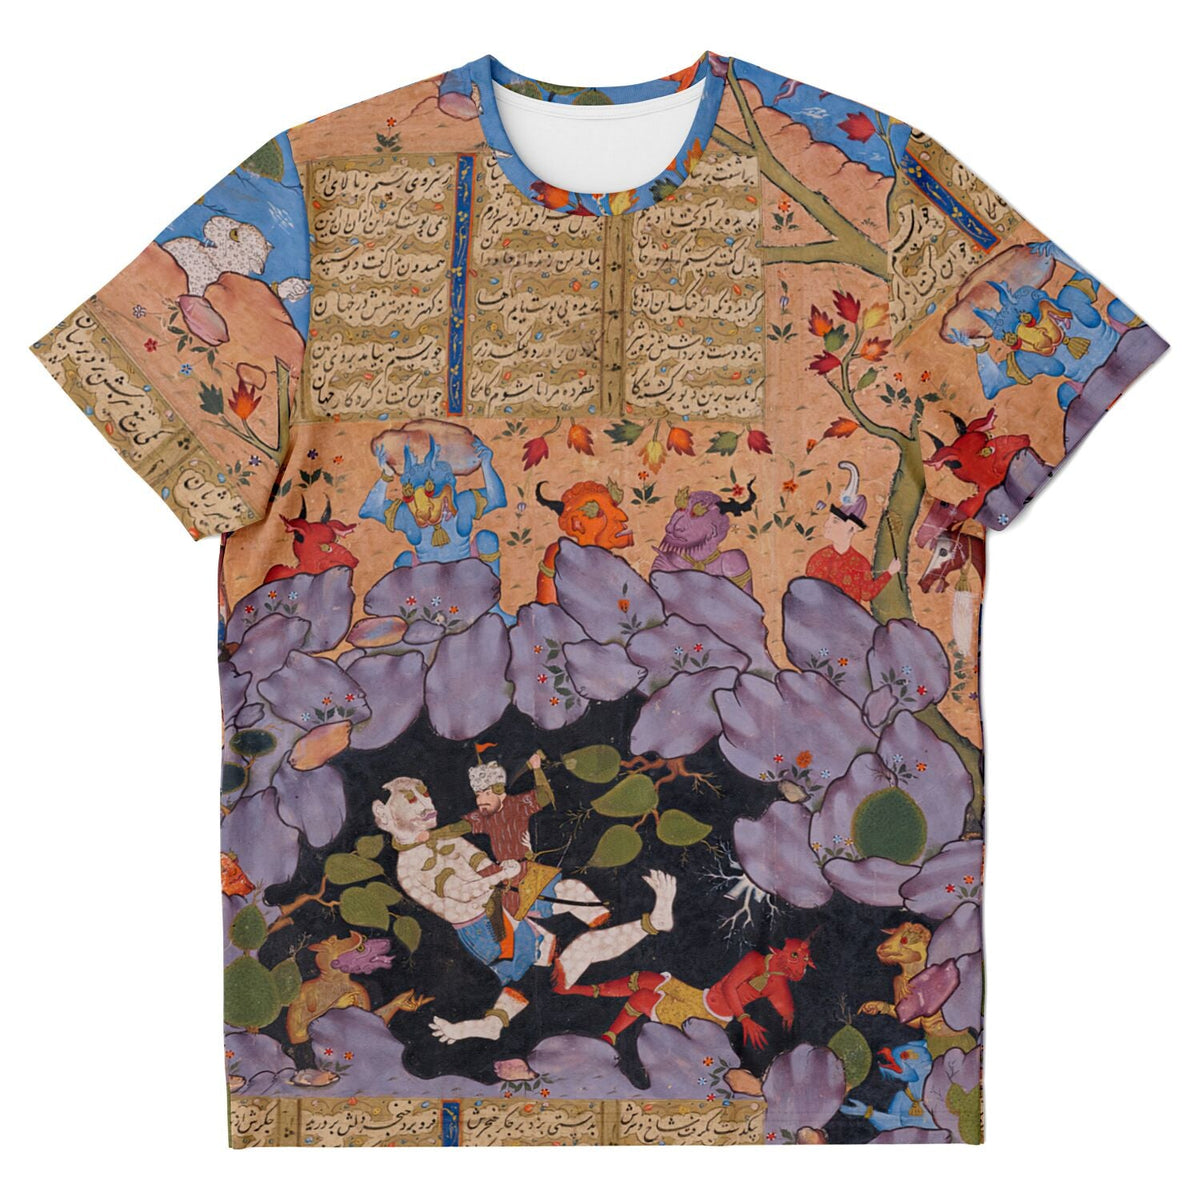 Rostam Battles the White Div (Demon) | Shāhnāmeh Ancient Persian Illuminated Codex Manuscript | Mythical Folkloric Graphic Art T-Shirt - Sacred Surreal